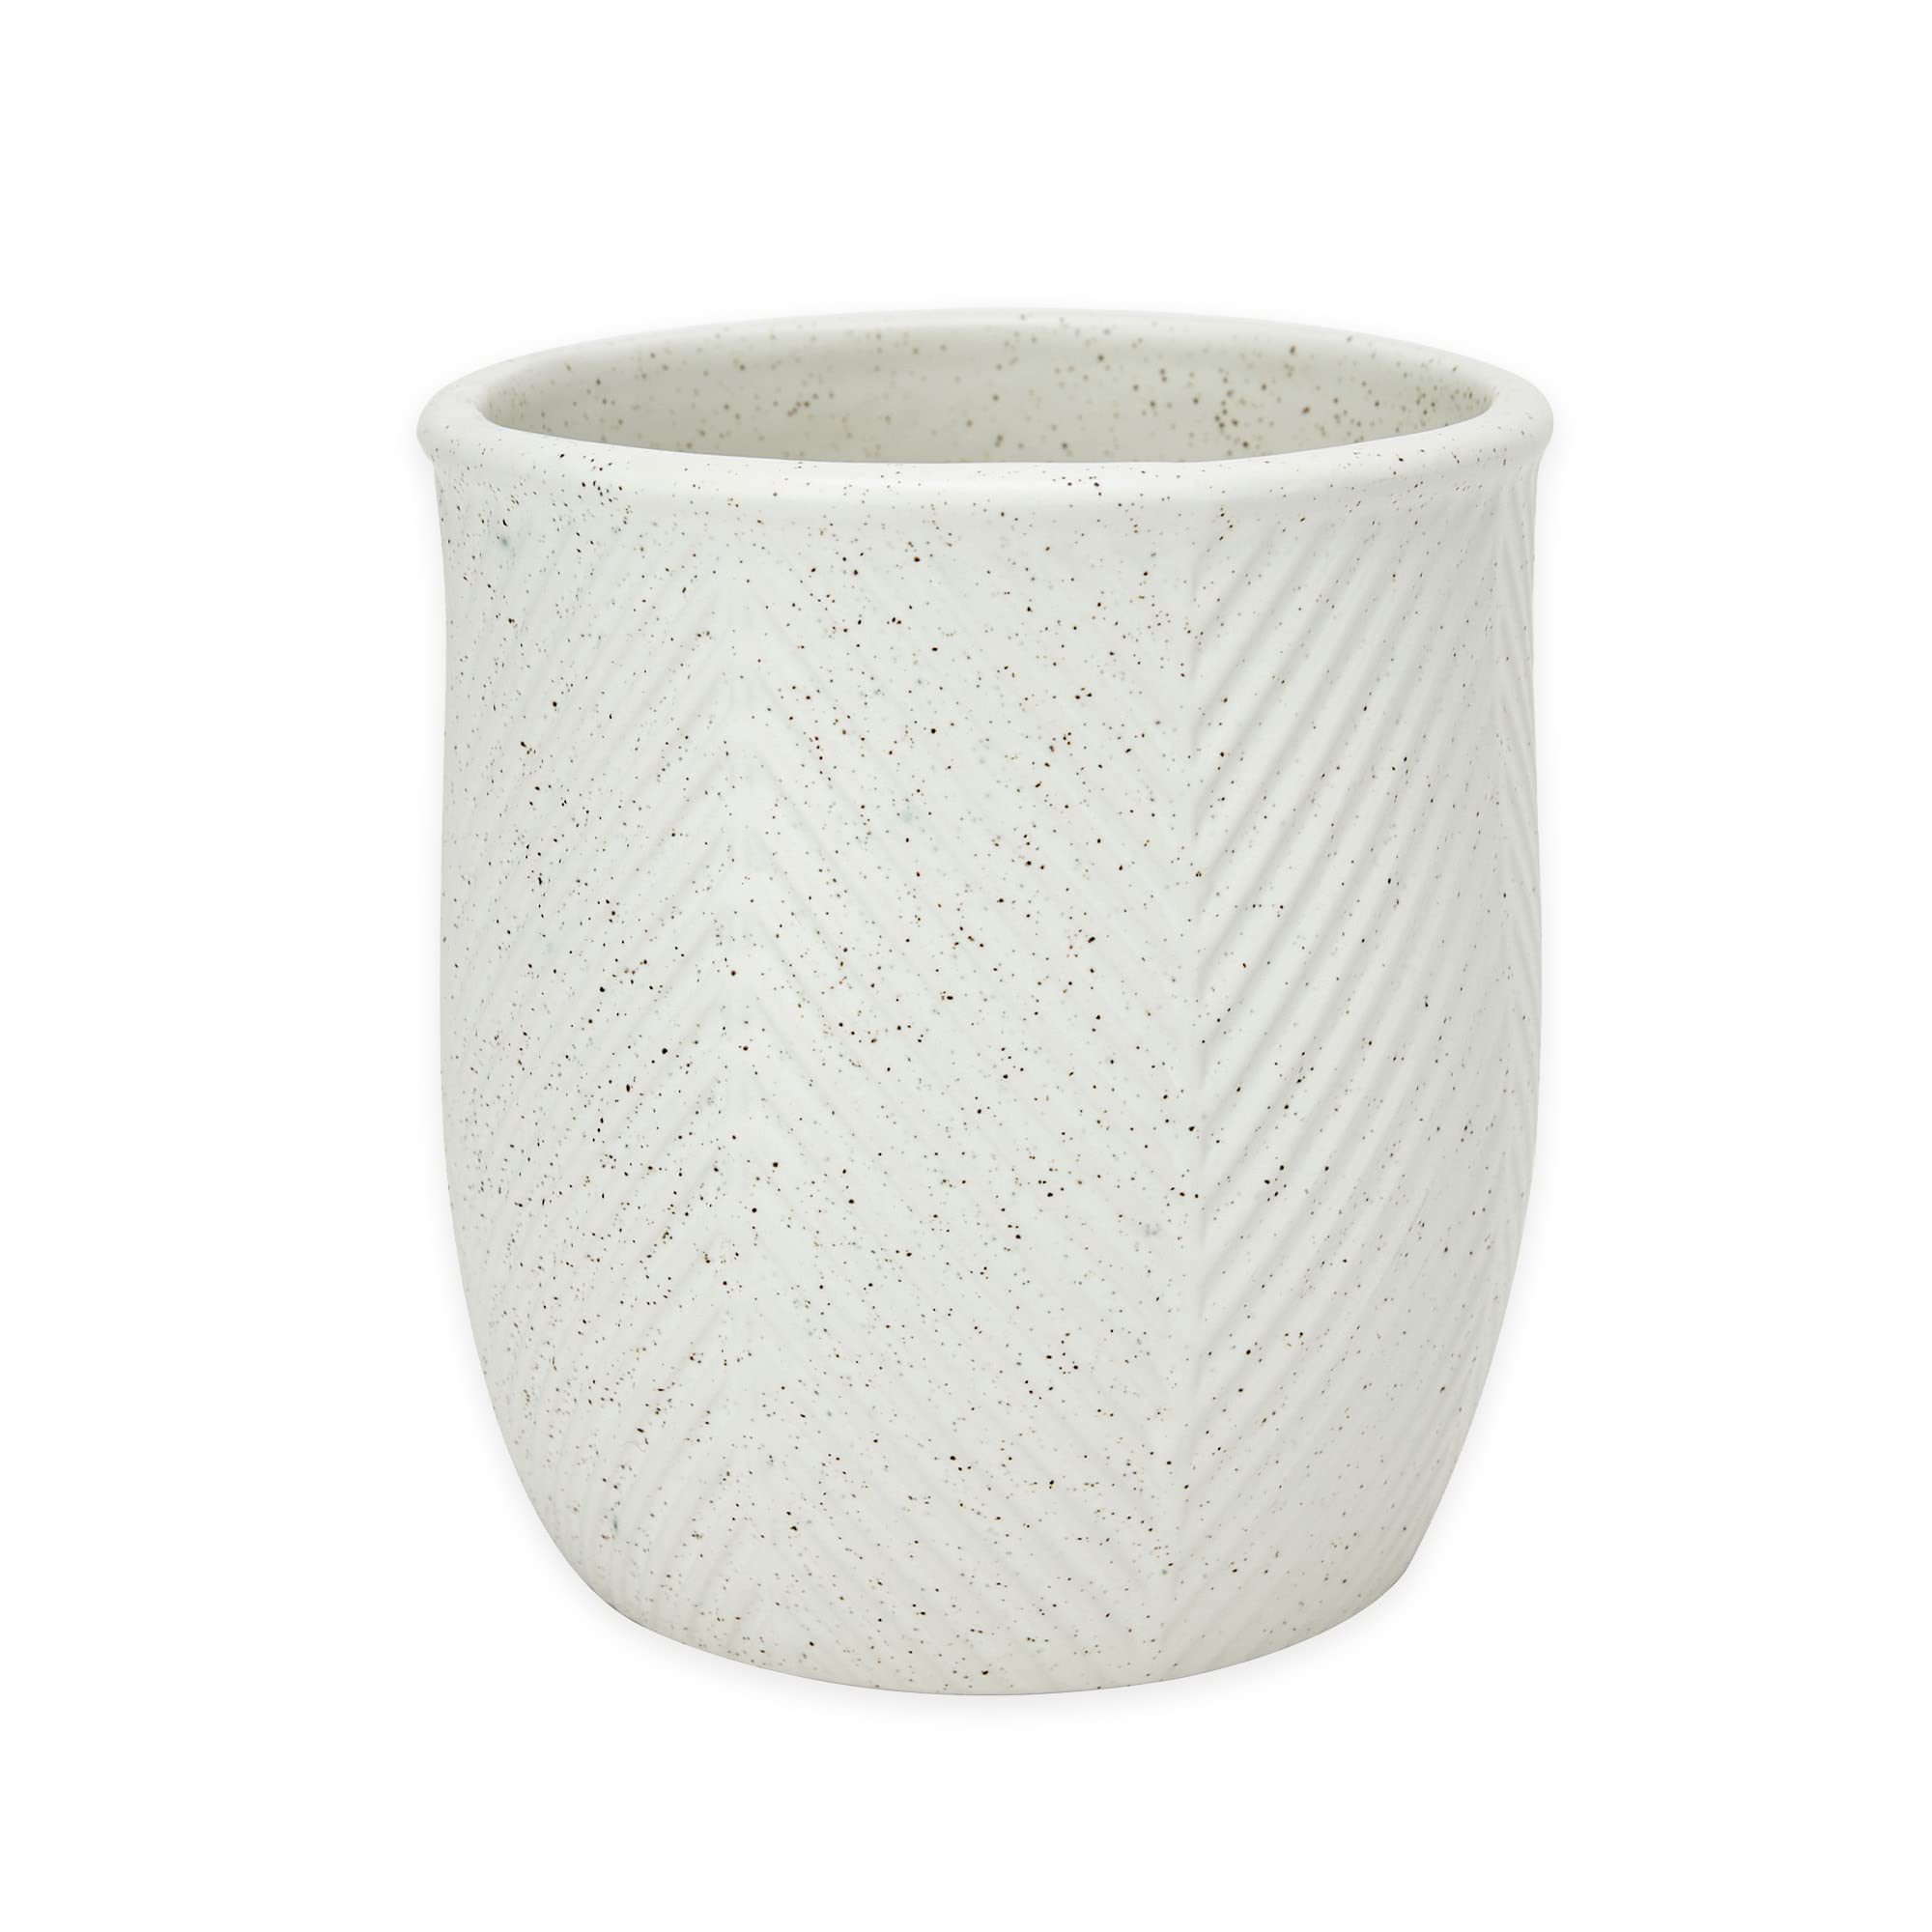 Anko Stoneware Flower Pot for Home Decor | Textured White Planter for Home, Office, Garden, Balcony | 13 Cm (H) x 12 Cm (D) (1 Pc)